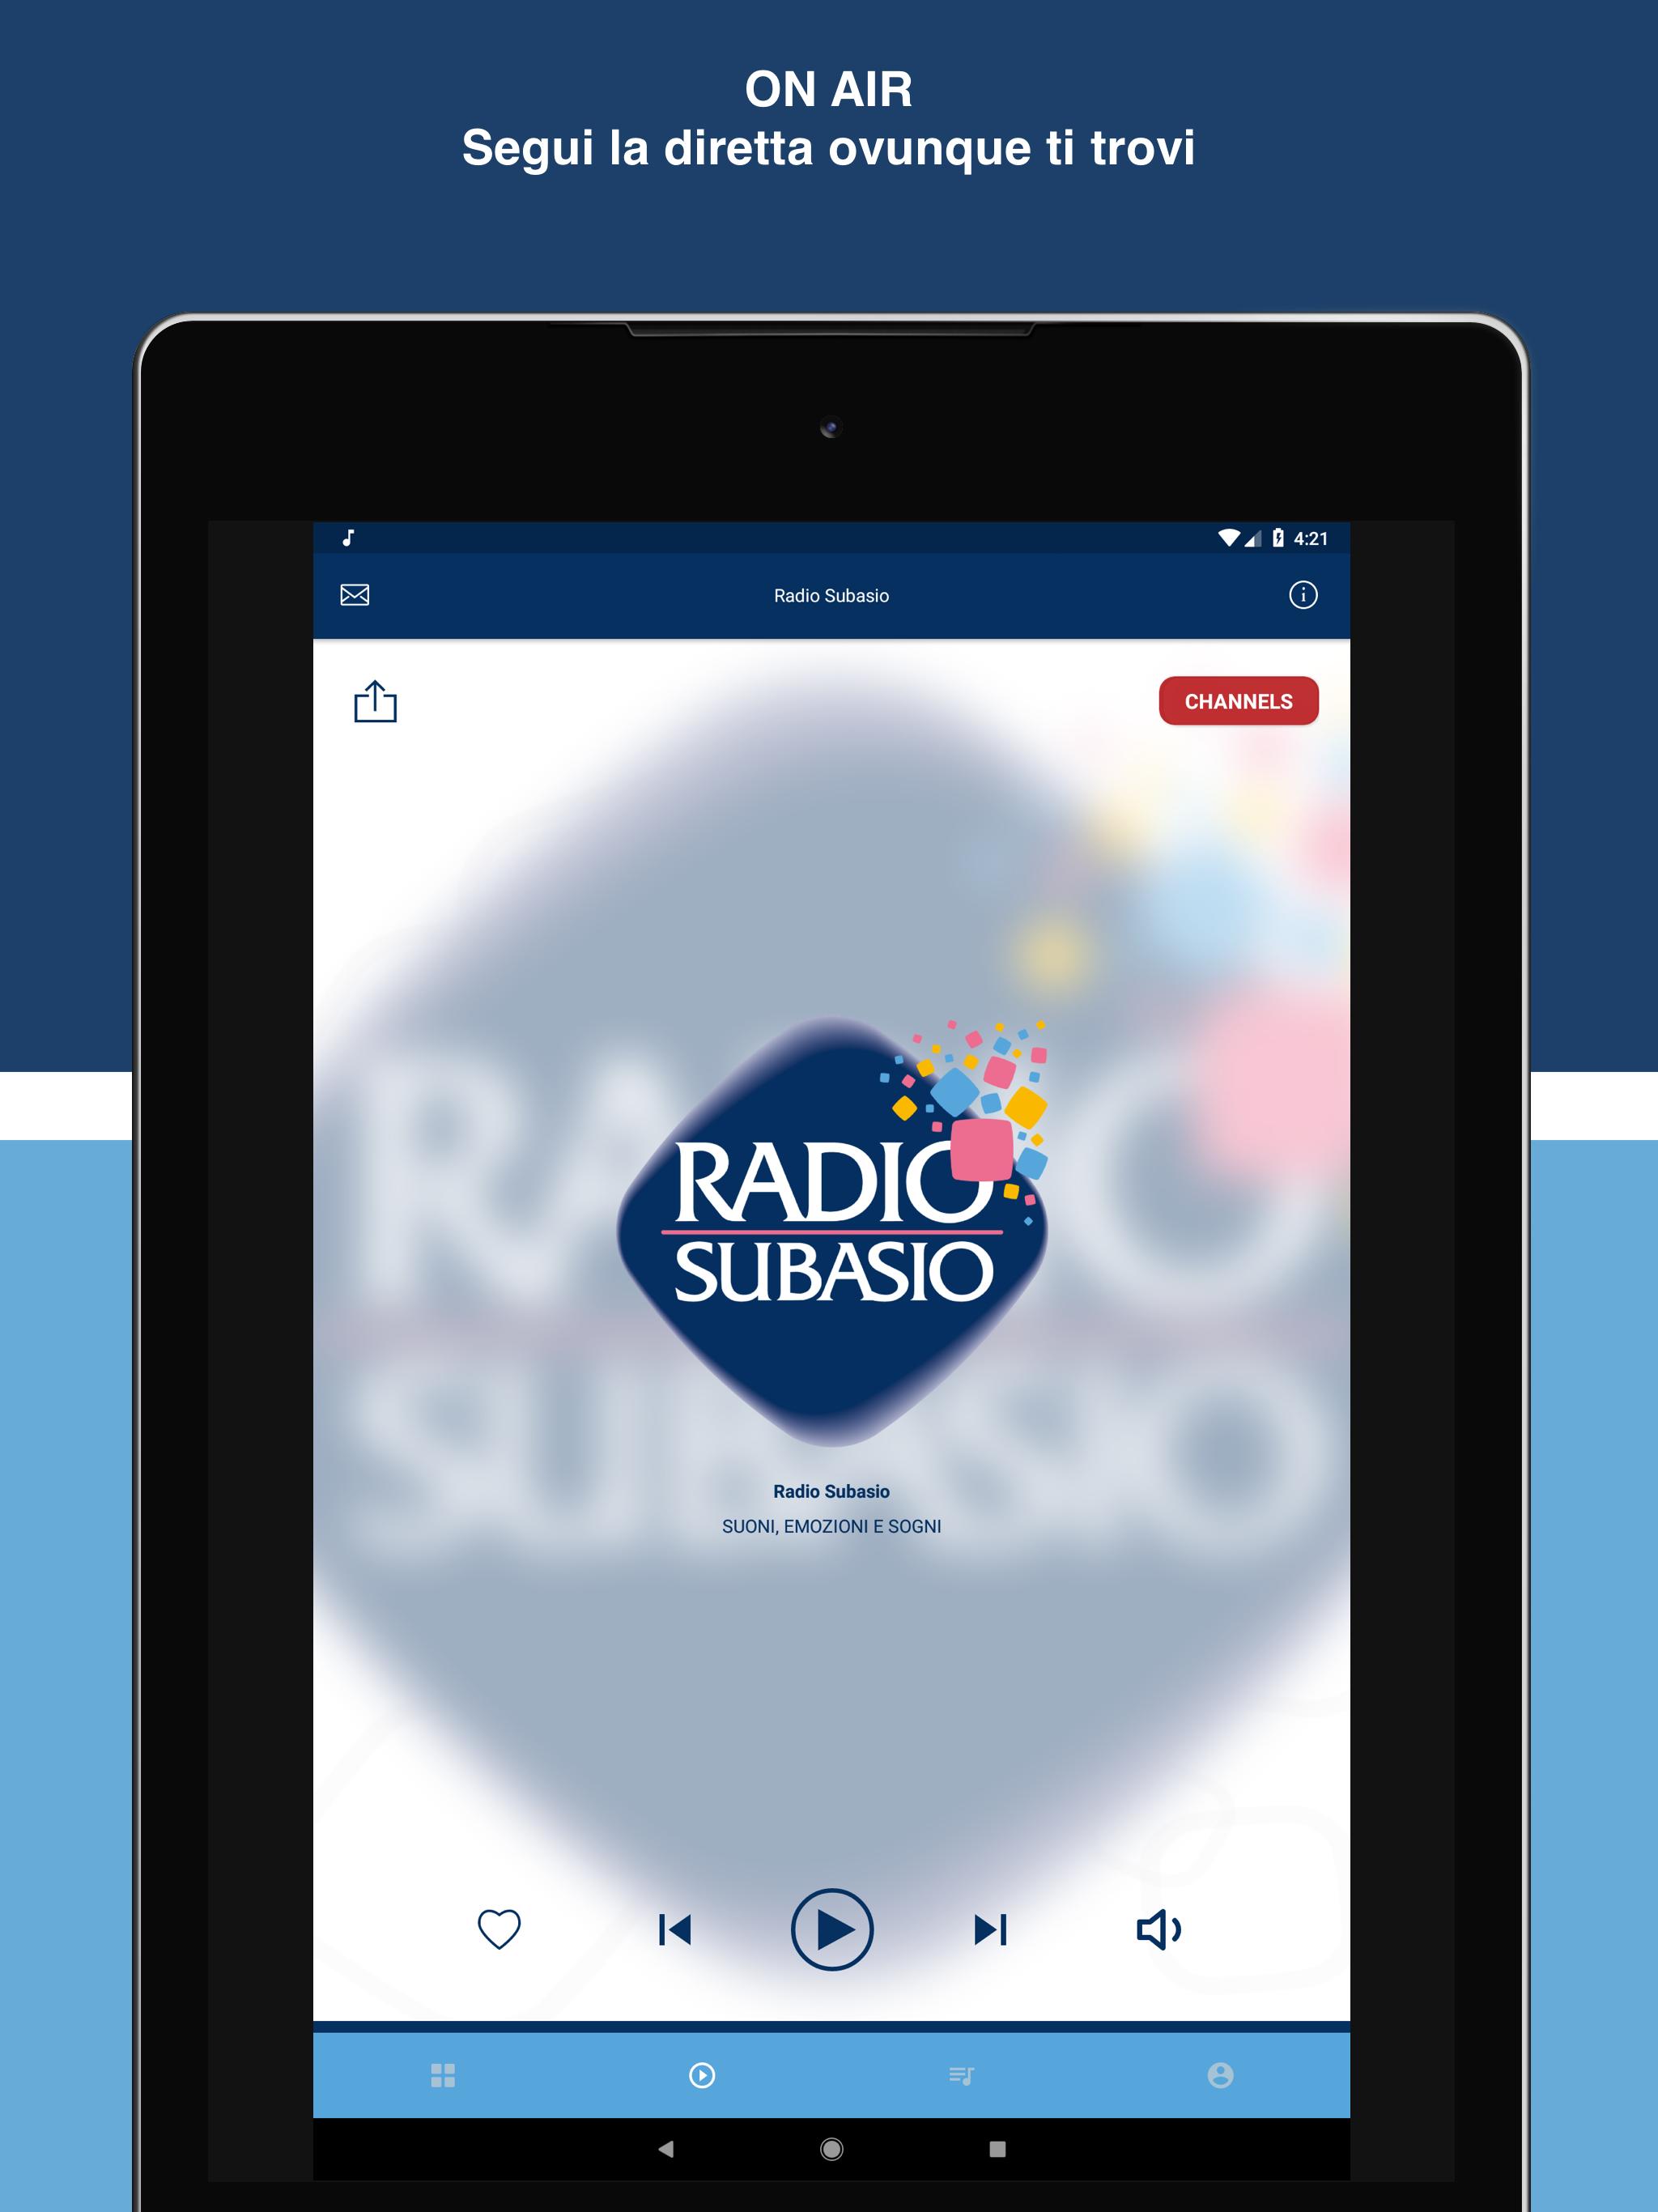 Radio Subasio for Android - APK Download